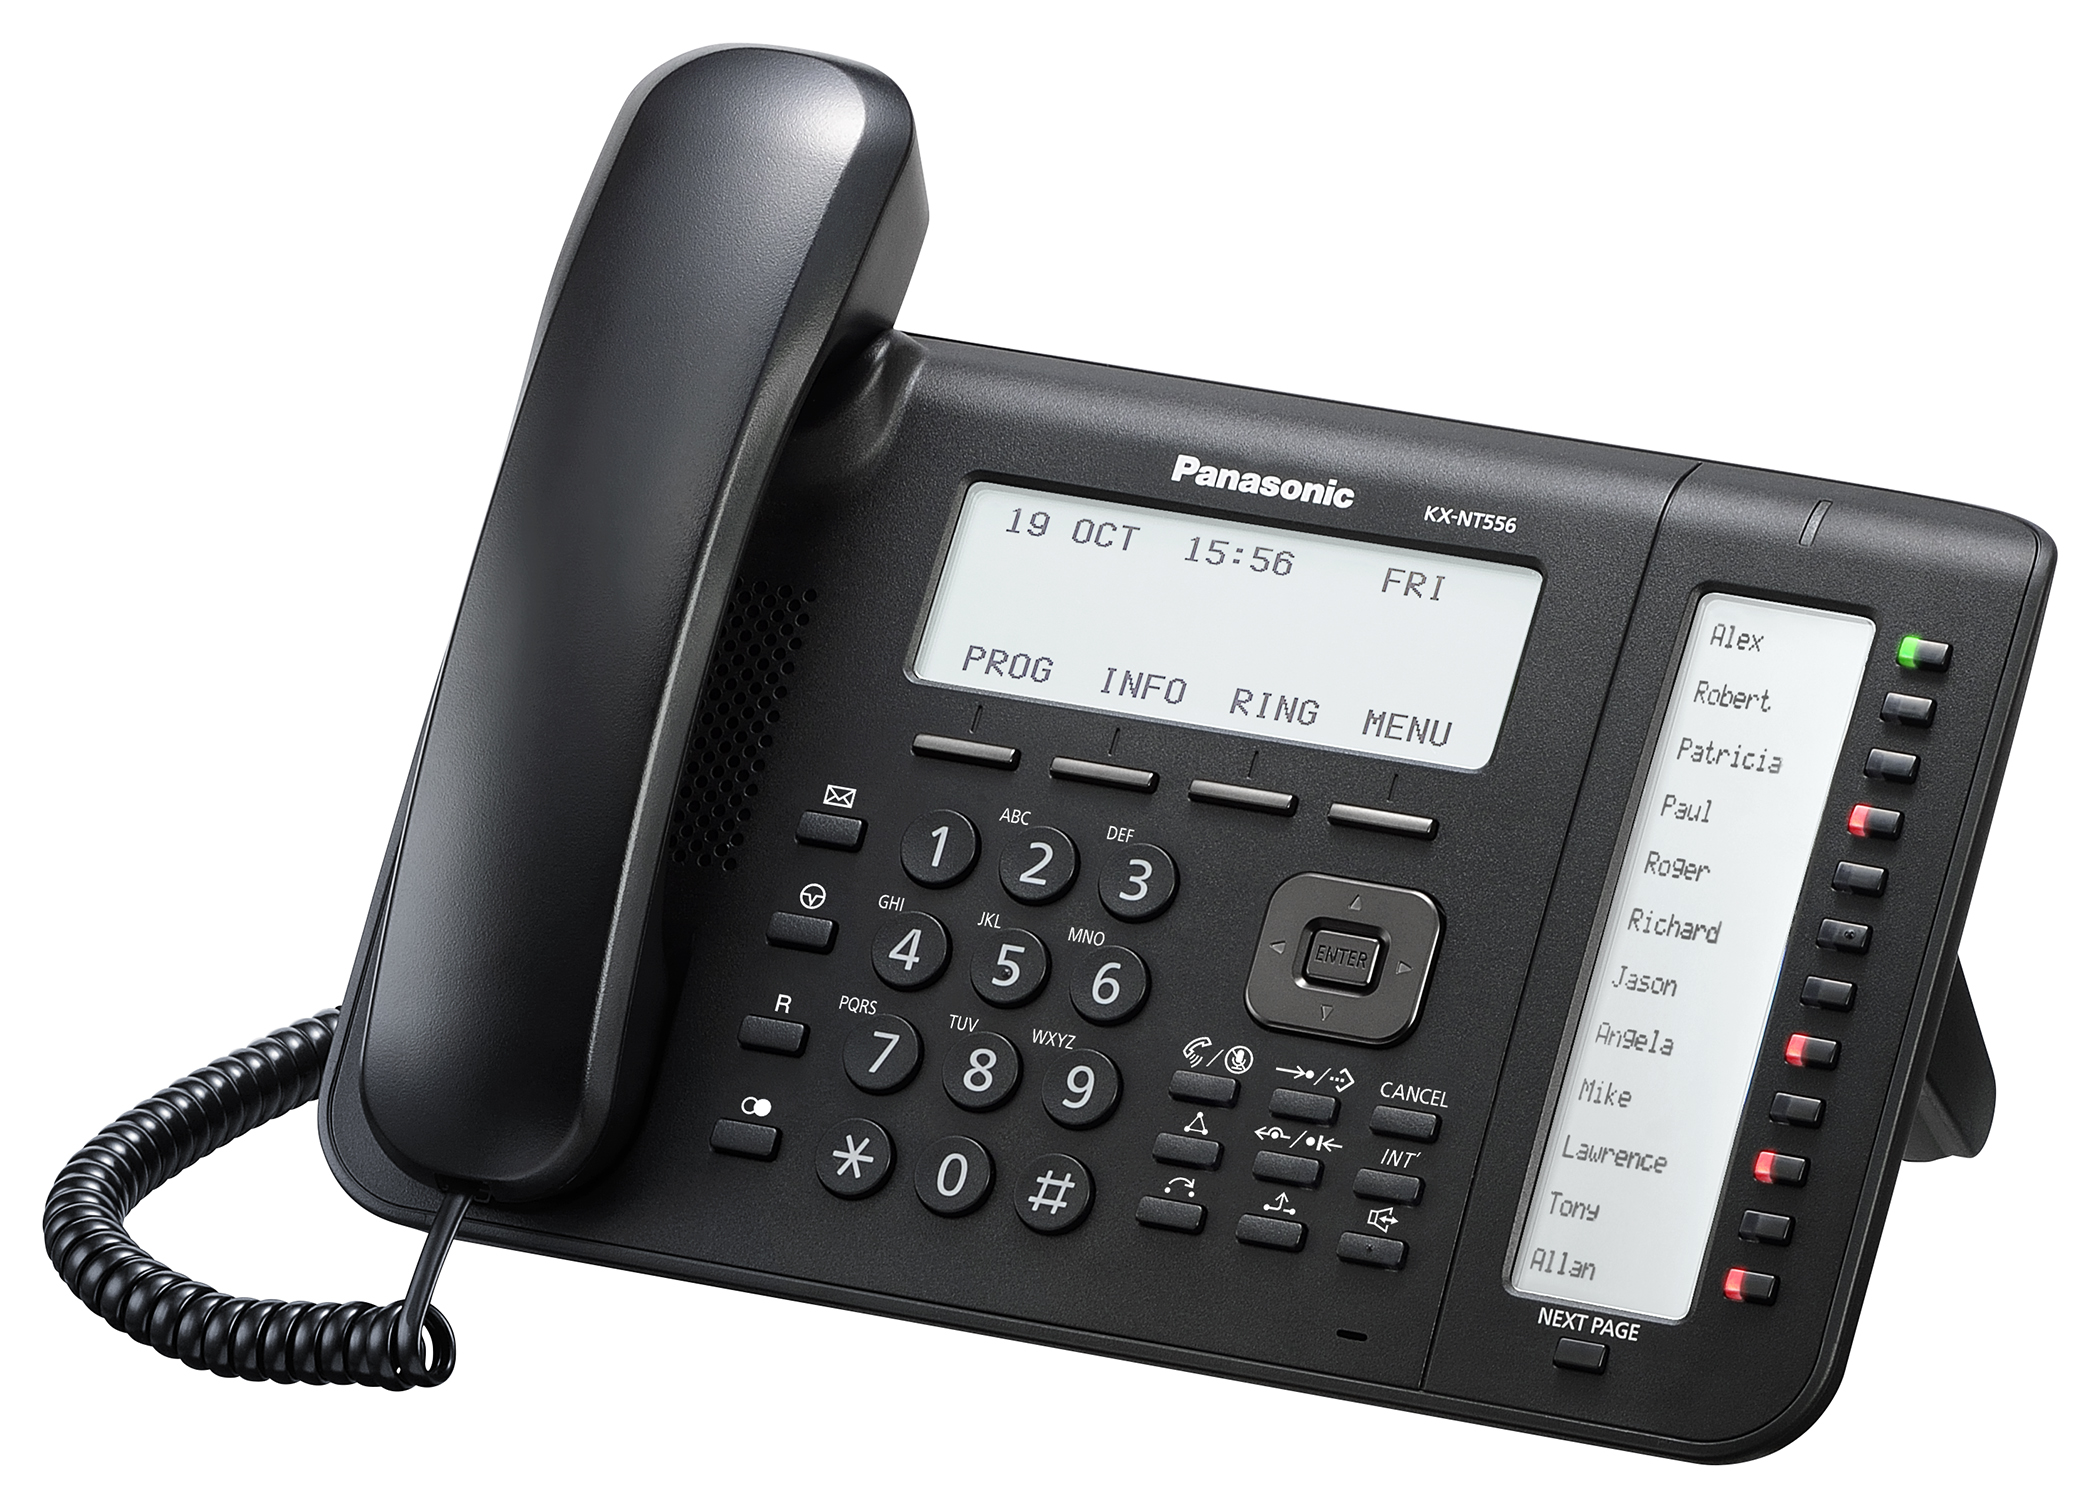 Telefono Panasonic KX-NT556 en color Negro para Conmutadores Panasonic Digitales KX-TDE, KX-NCP y Panasonic Servidor de Comunicaciones KX-NS